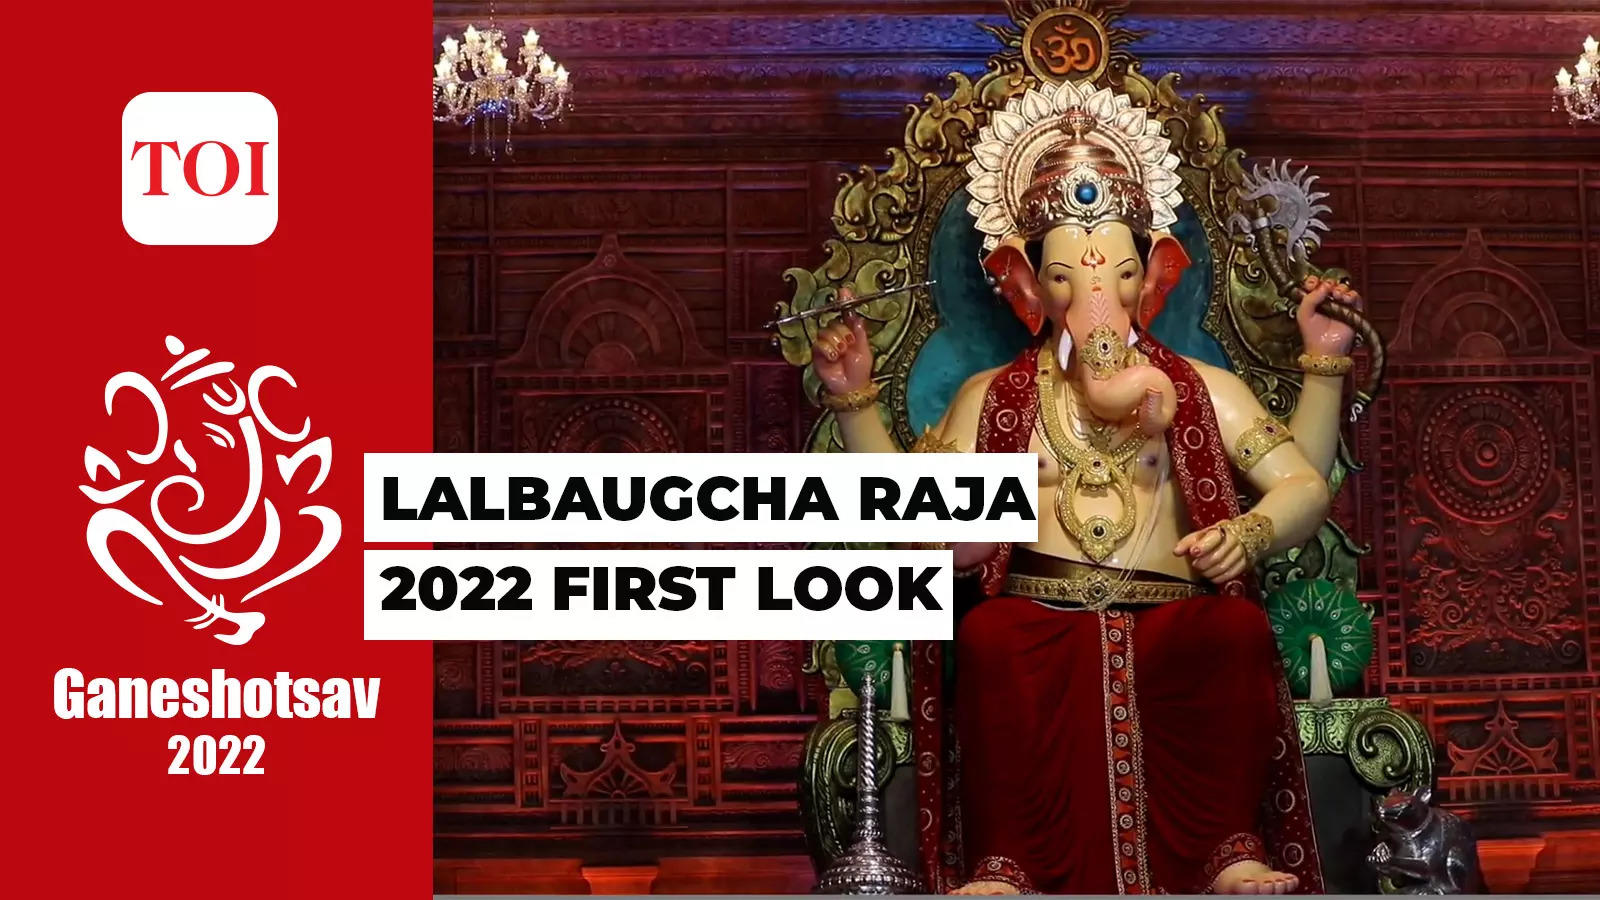 Ganesh Chaturthi 2022: First look of Mumbai's Lalbaugcha Raja 2022 ...